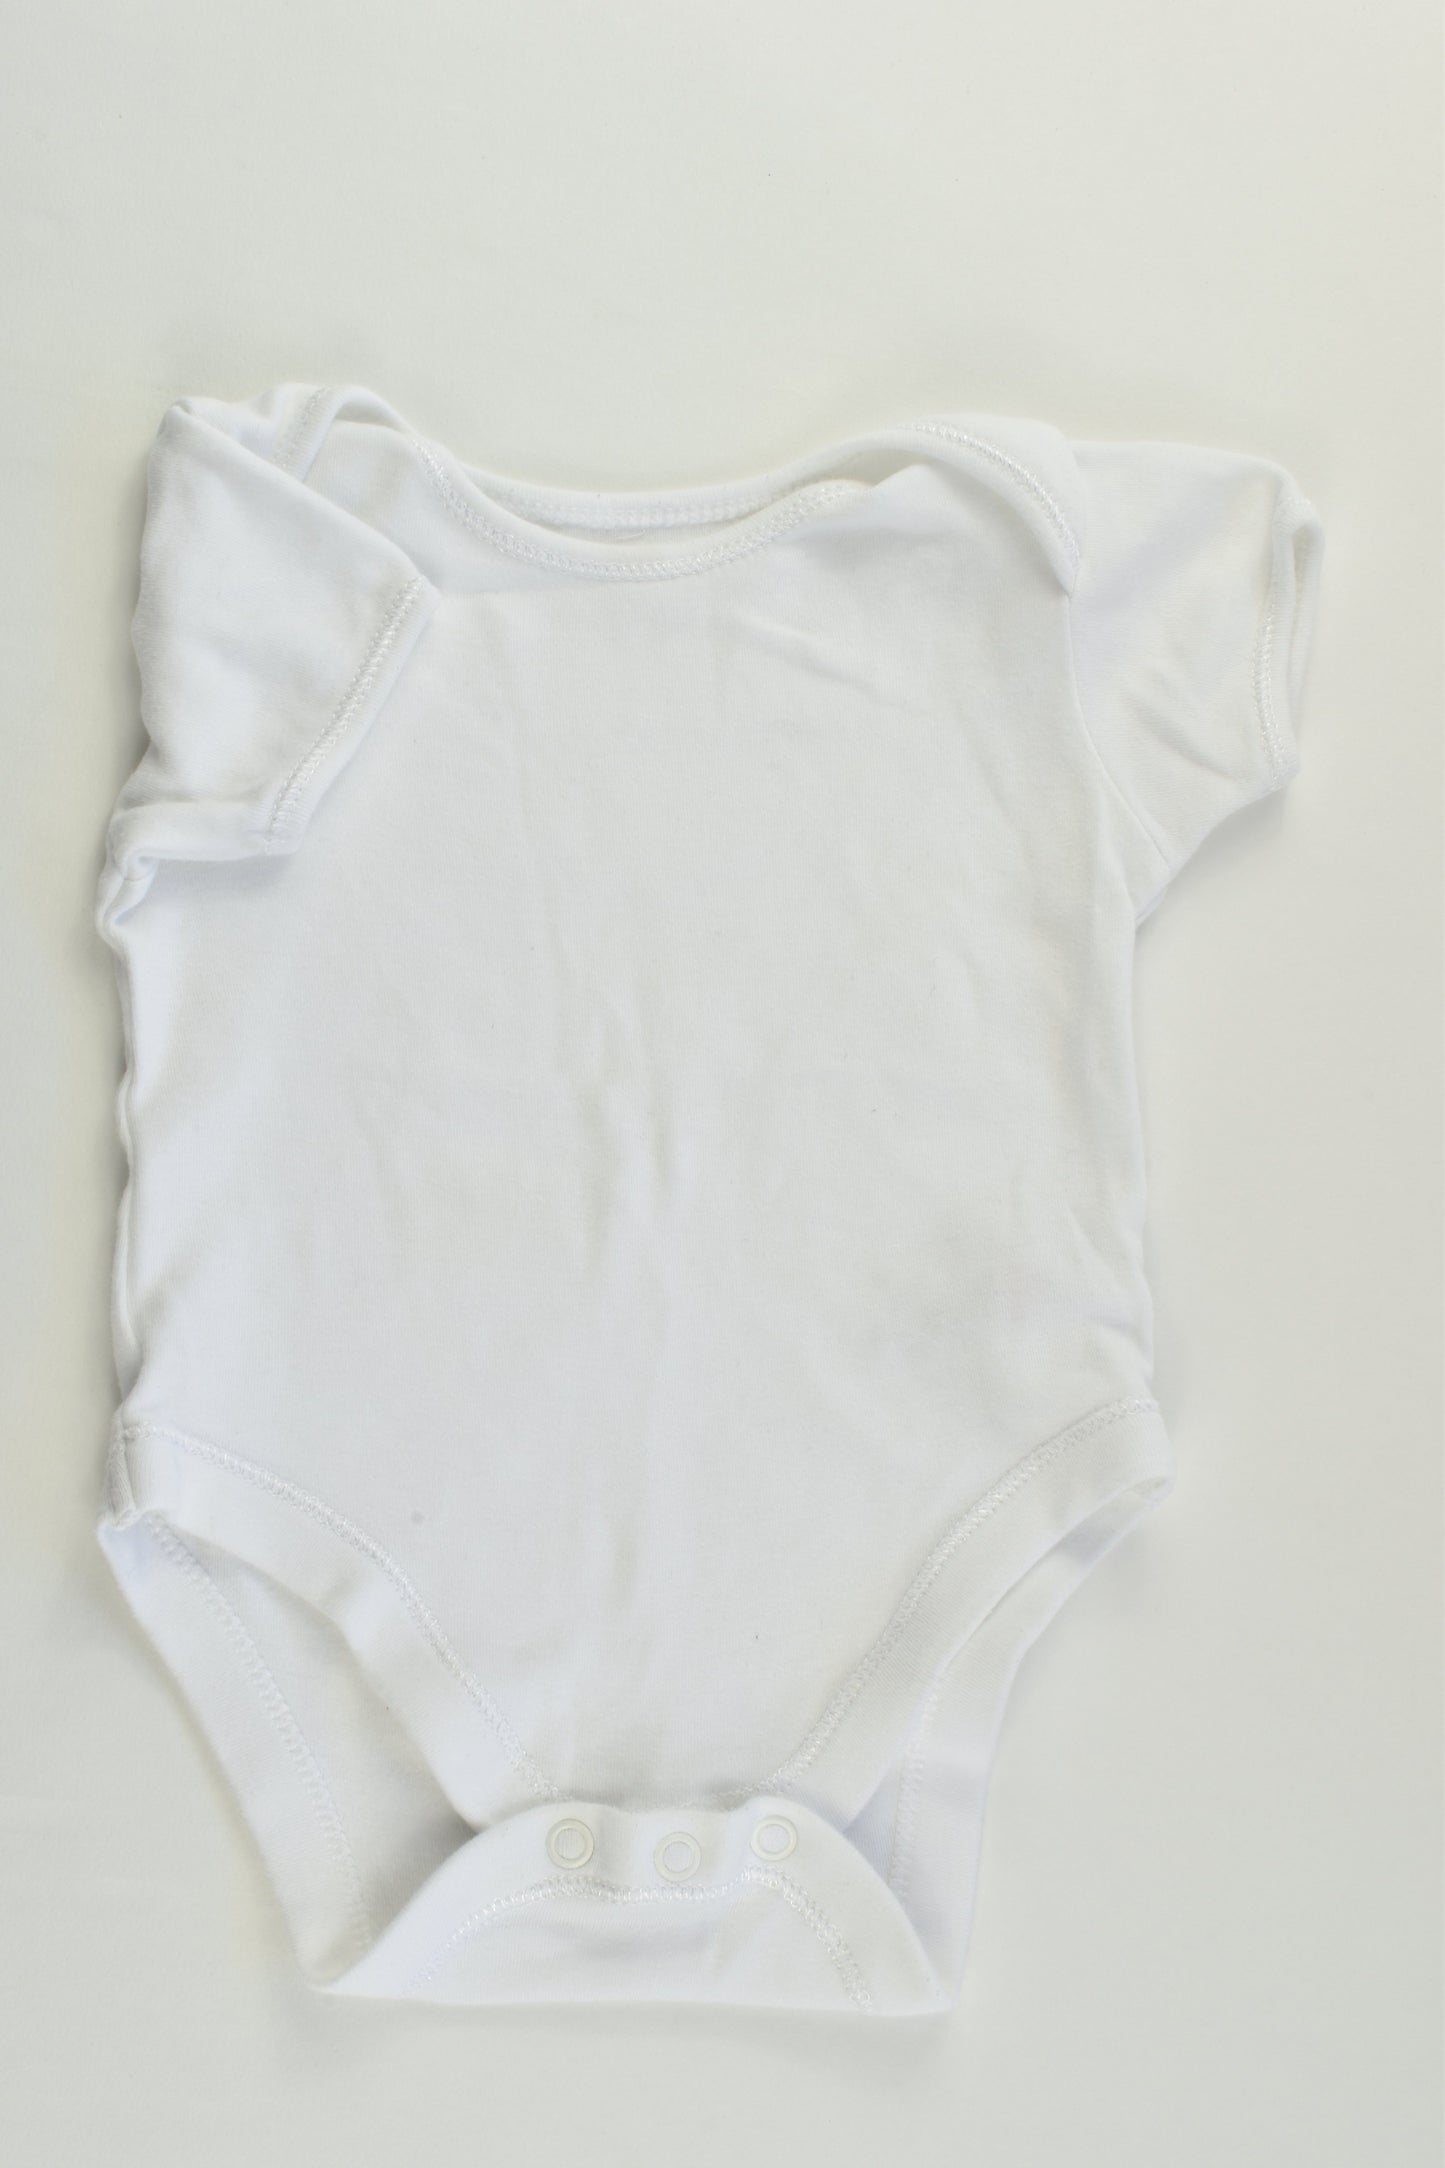 George Size 00 (3-6 months) White Bodysuit